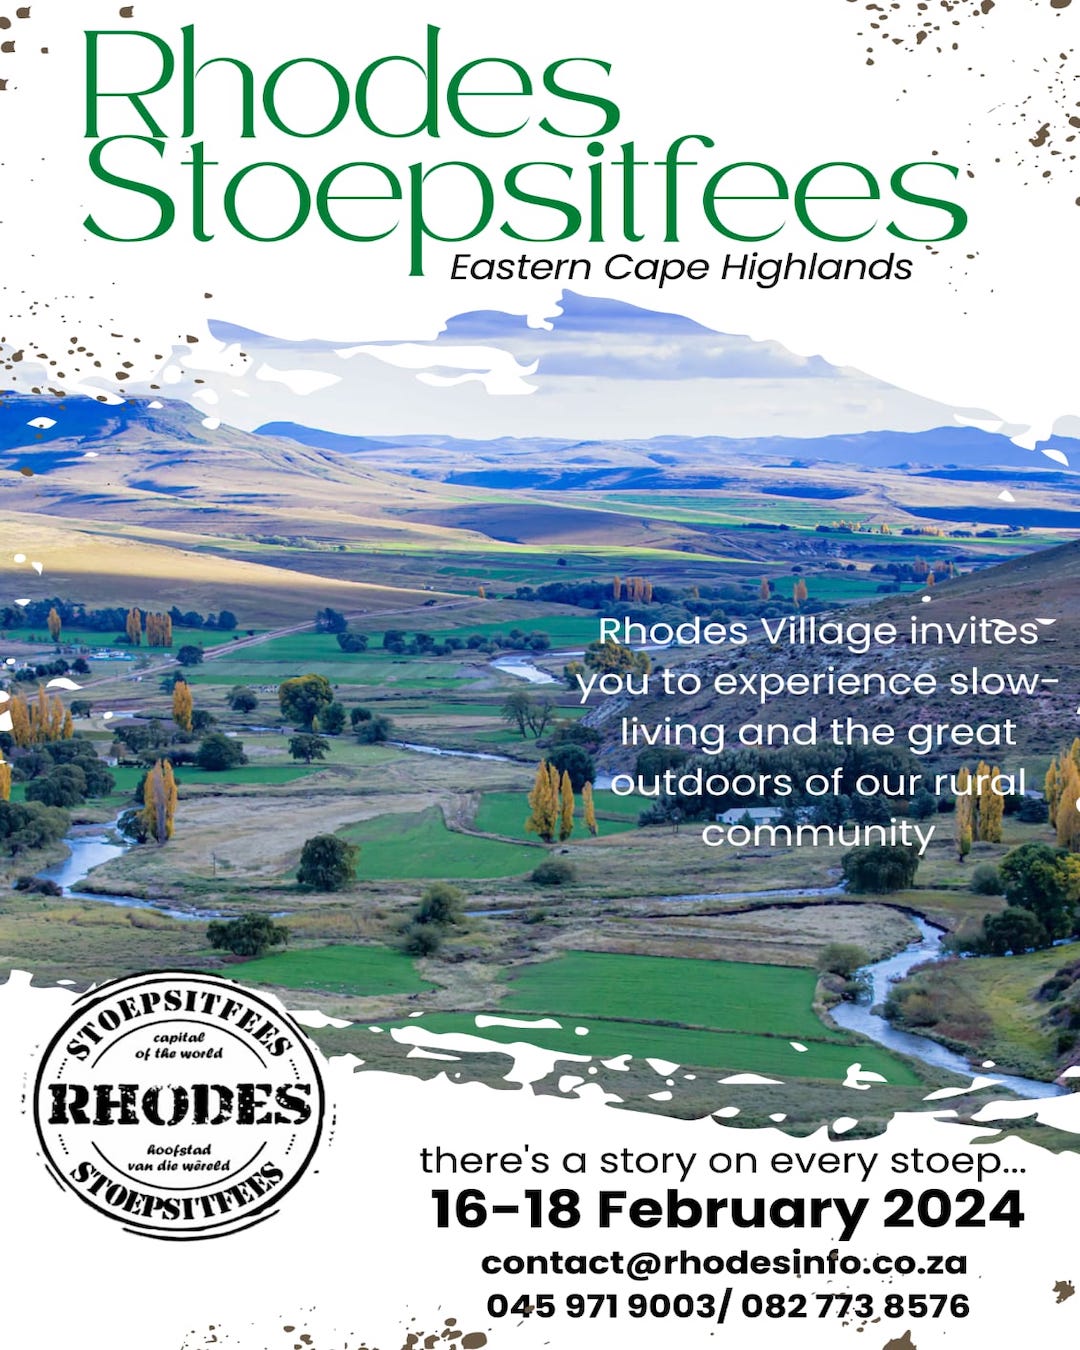 Rhodes Stoepsitfees 2024